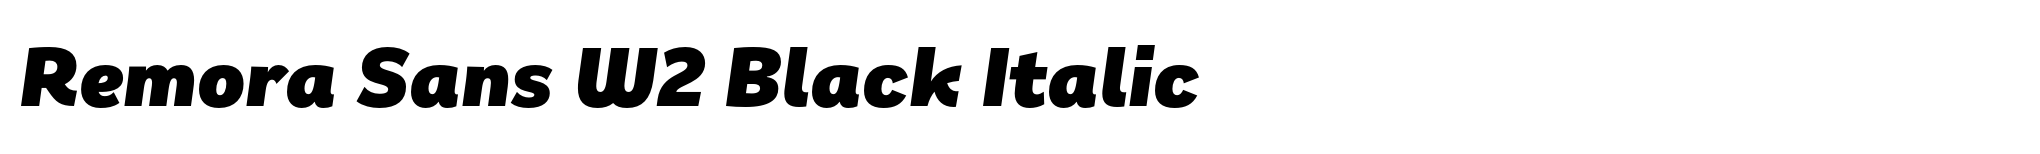 Remora Sans W2 Black Italic image